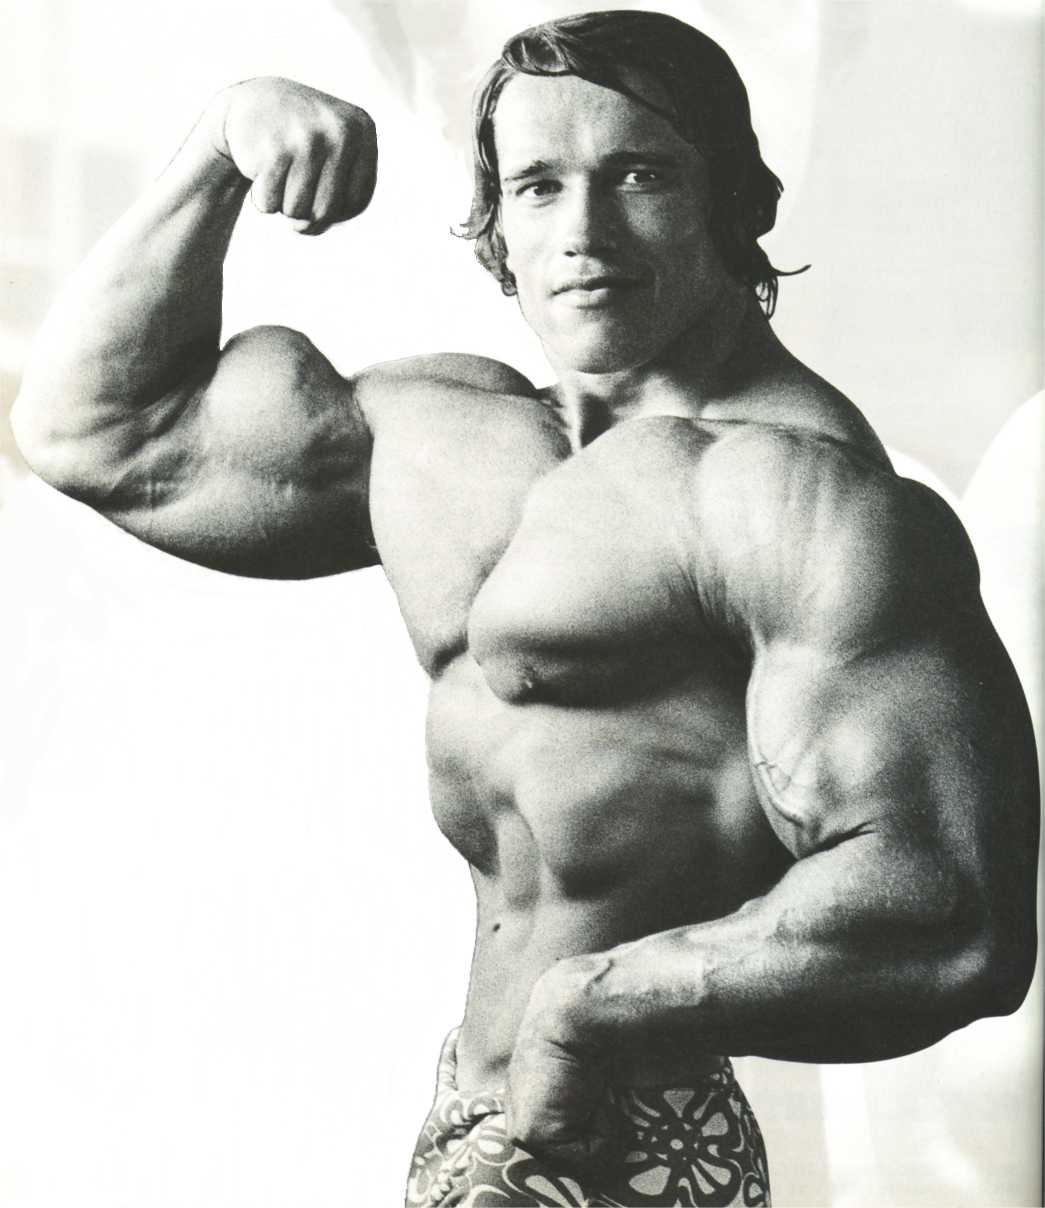 Arnold &quot;The Austrian Oak&quot; Schwarzenegger